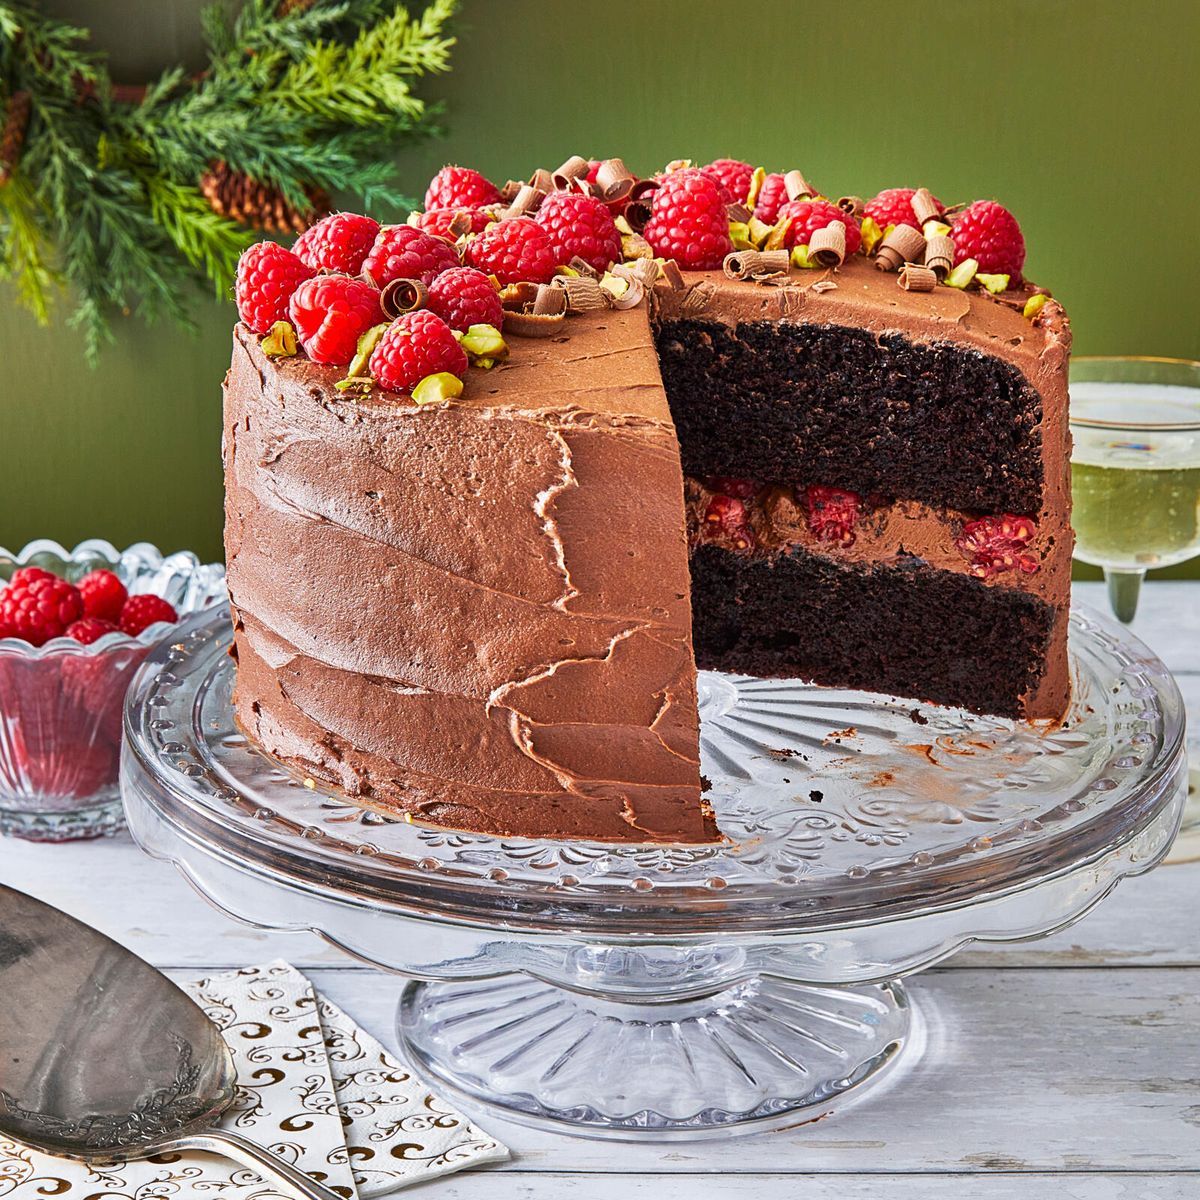 Best Chocolate Raspberry Cake Recipe - How to Make Chocolate Raspberry Cake